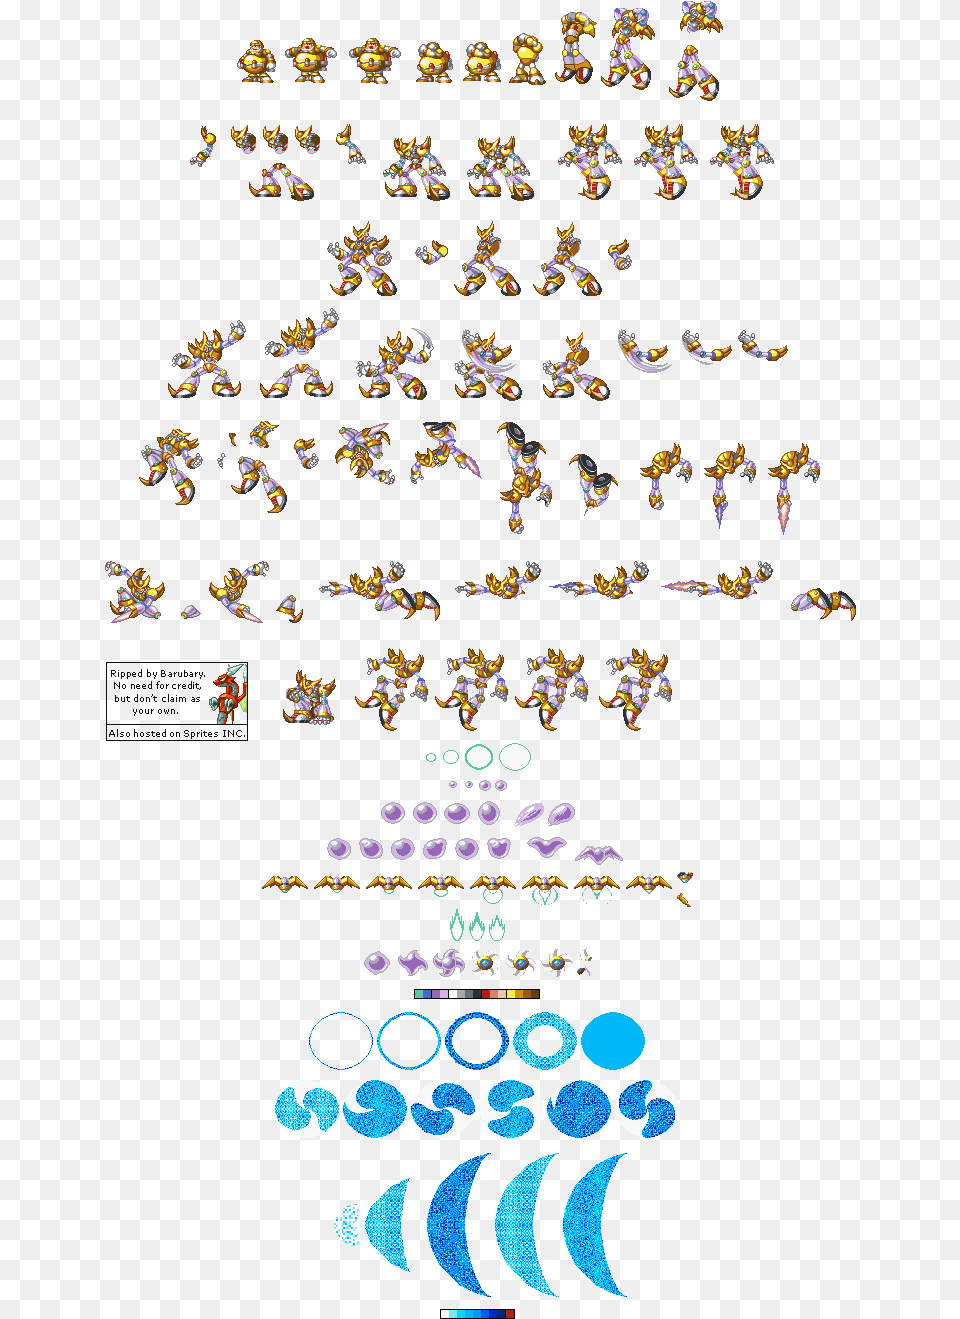 Megaman X4 Sprite Sheet Mega Man X4 Sprites, Advertisement, Poster, Person, Text Png